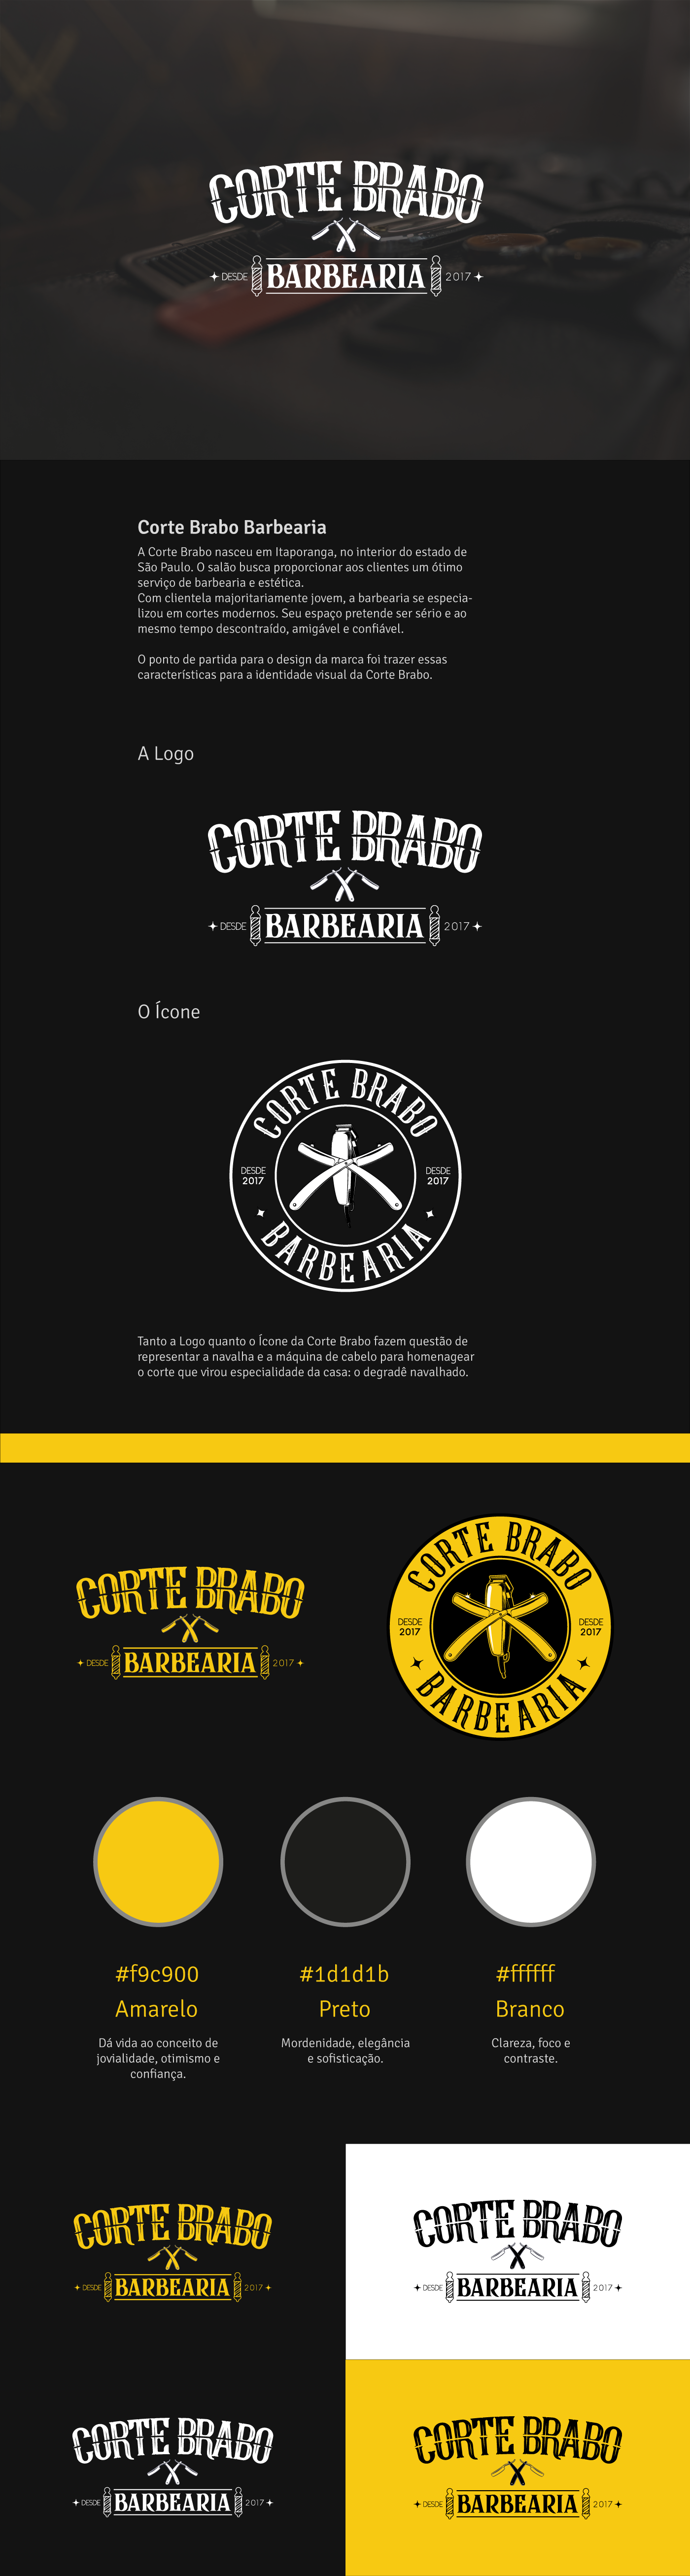 barbearia barber branding  design design gráfico graphic design  identidade visual logo marca projeto